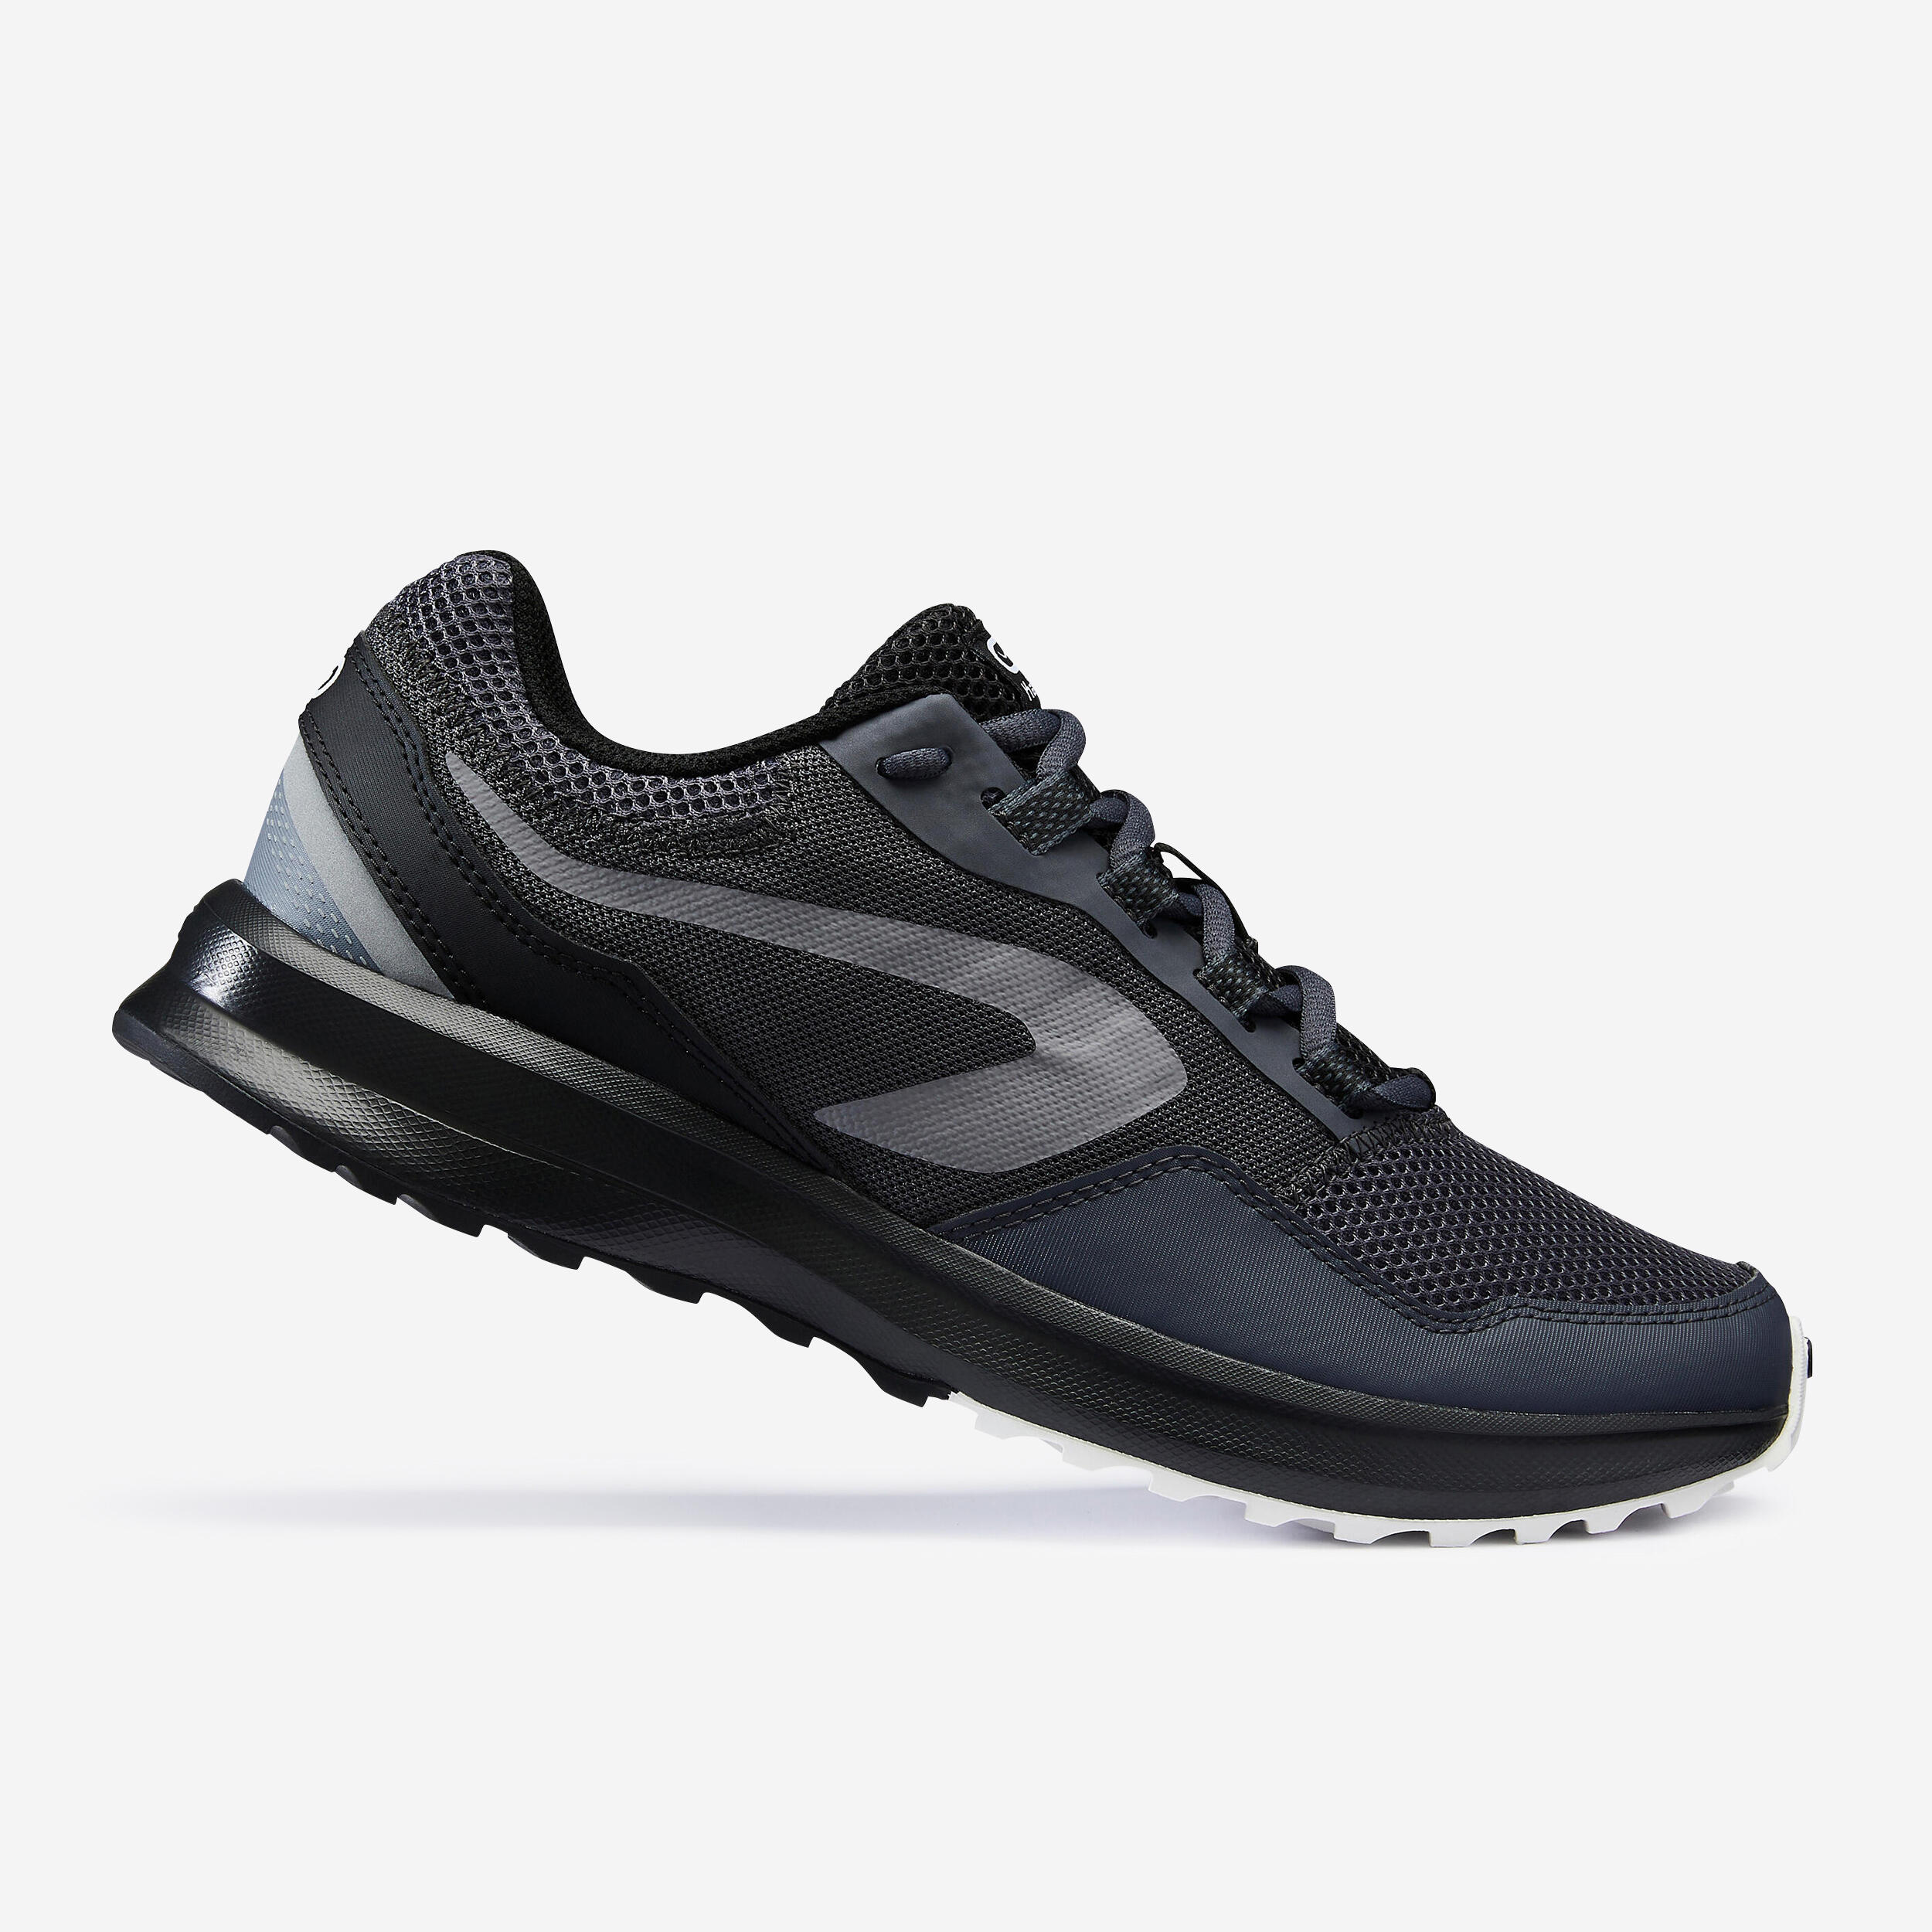 Chaussures de course  homme - Run active noir - KALENJI